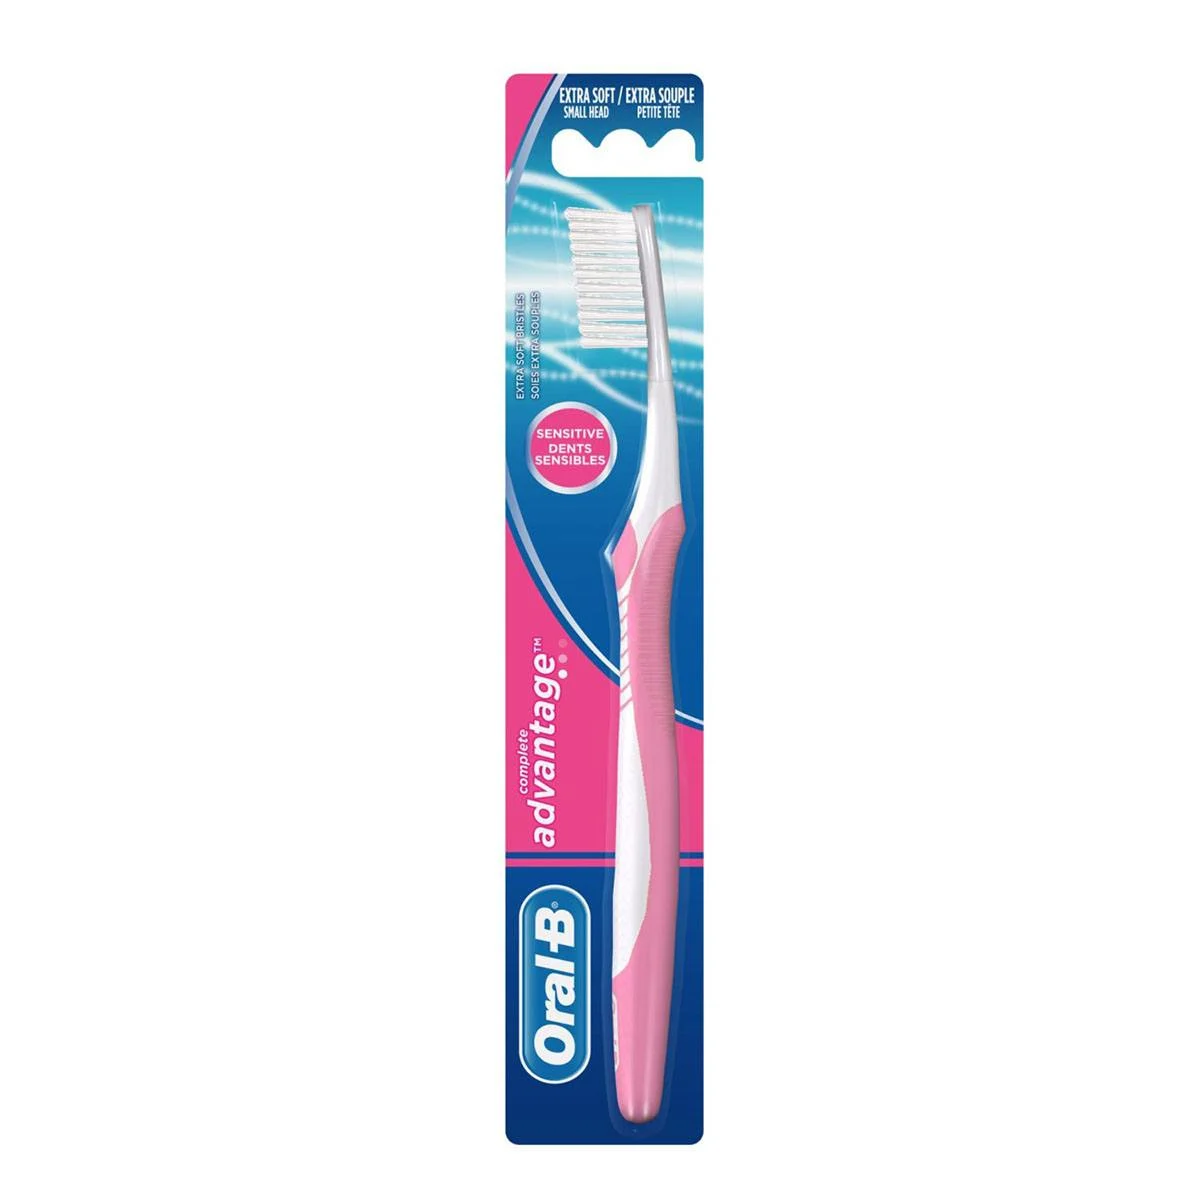 Oral-B Complete Advantage Sensitive Manual Toothbrush 